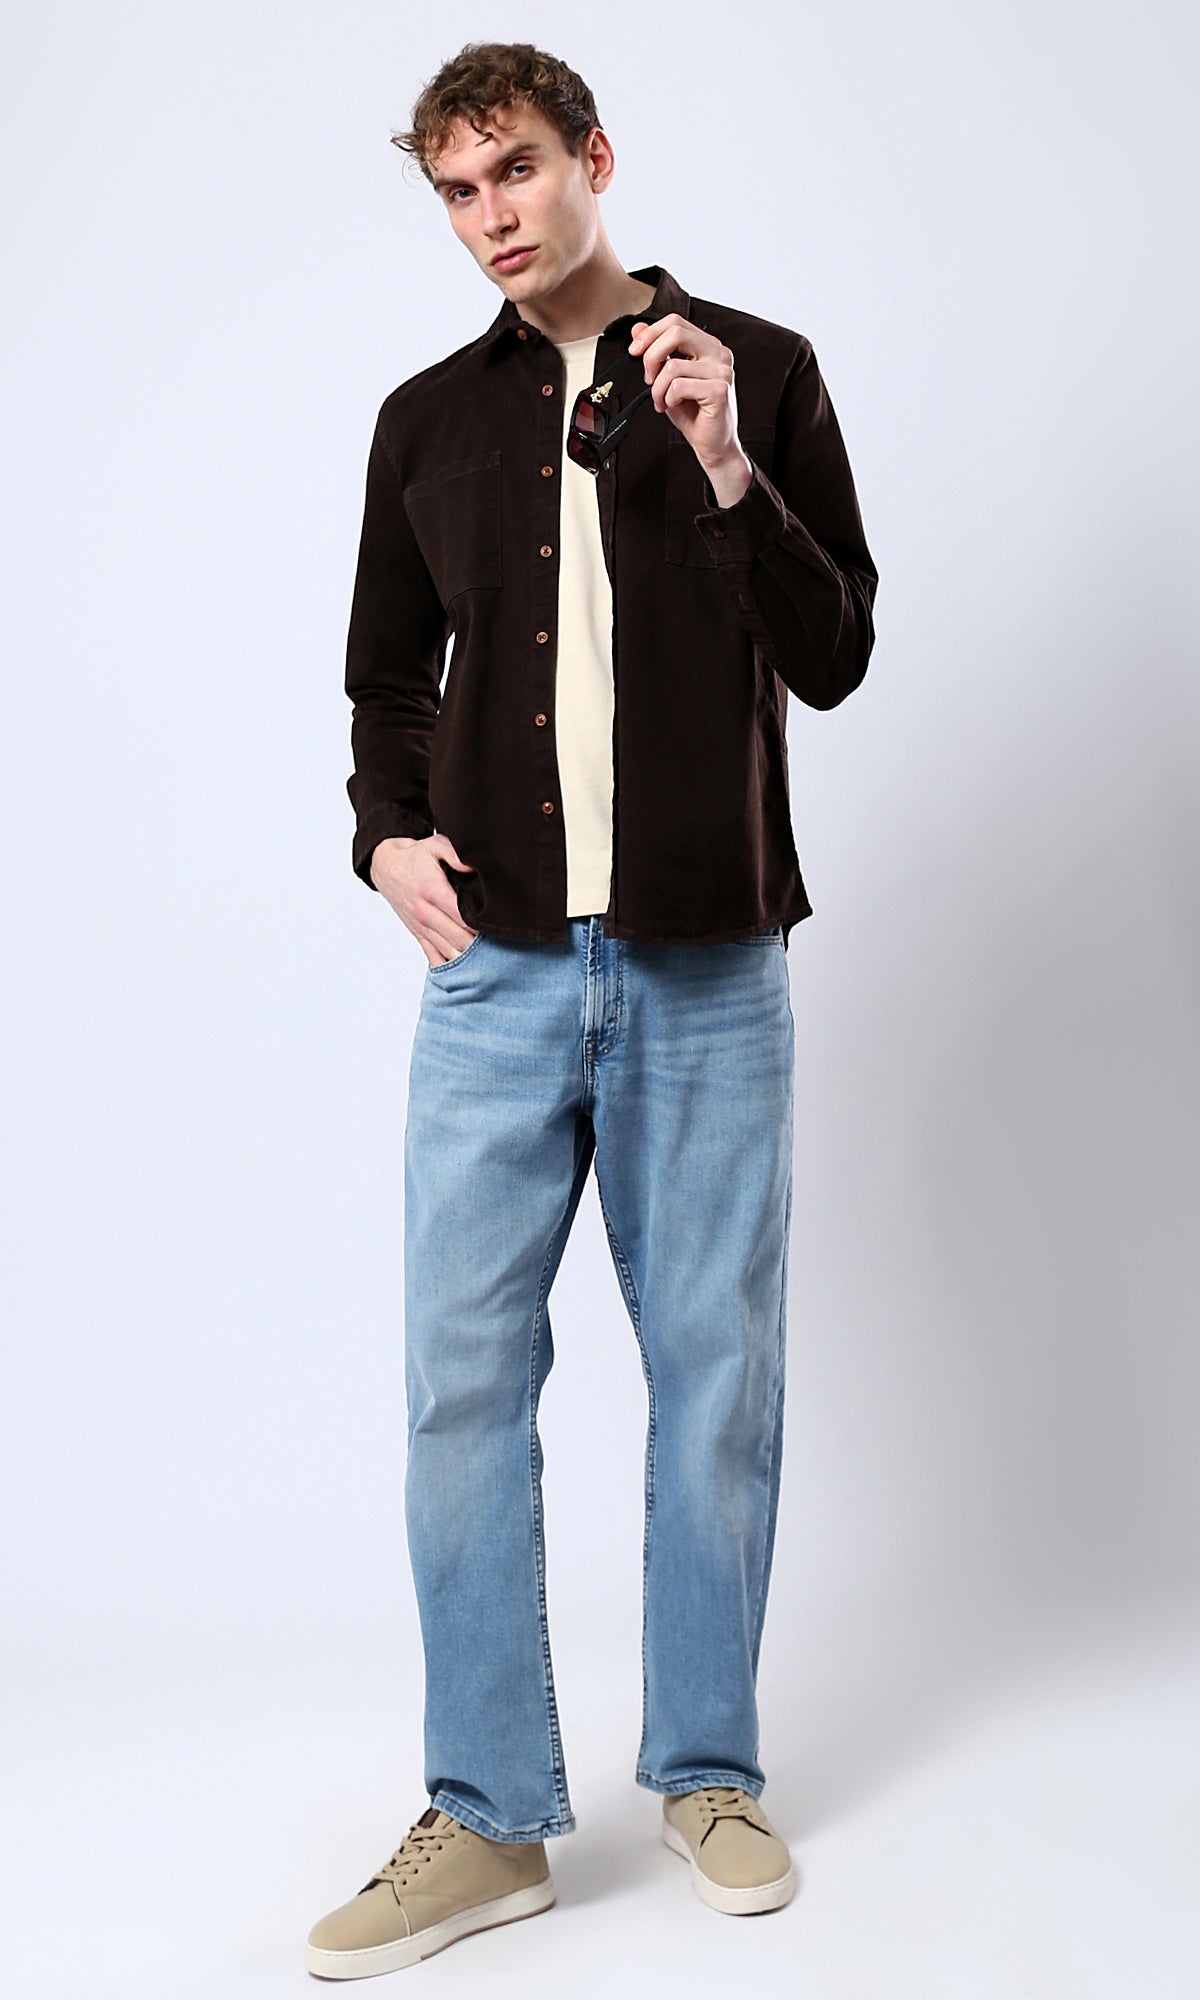 O175644 Classic Collar Long Sleeves Dark Brown Shirt